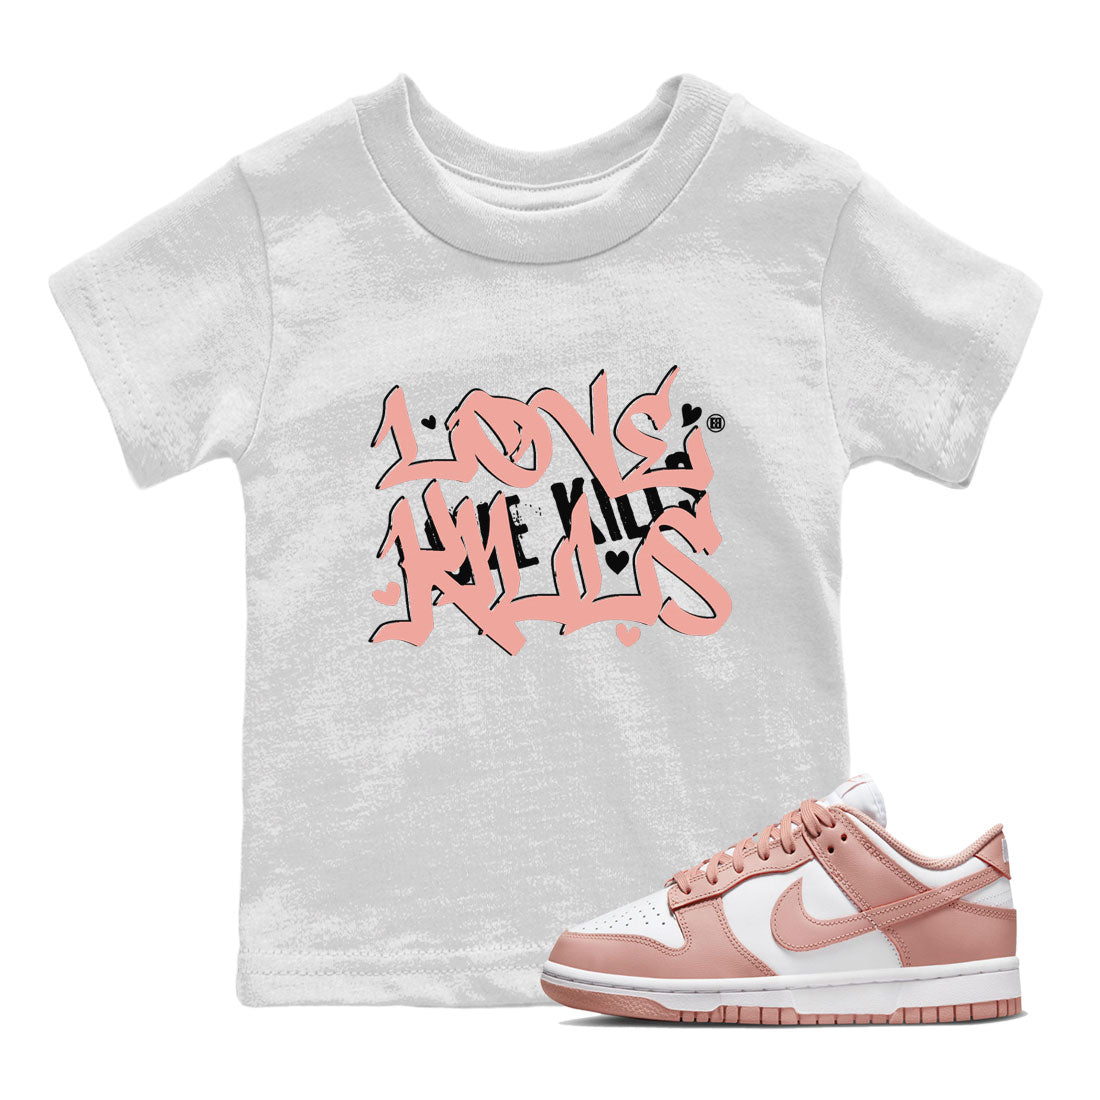 Dunks Low Rose Whisper shirt to match jordans Love Kills Streetwear Sneaker Shirt Dunk Rose Whisper Drip Gear Zone Sneaker Matching Clothing Baby Toddler White 1 T-Shirt